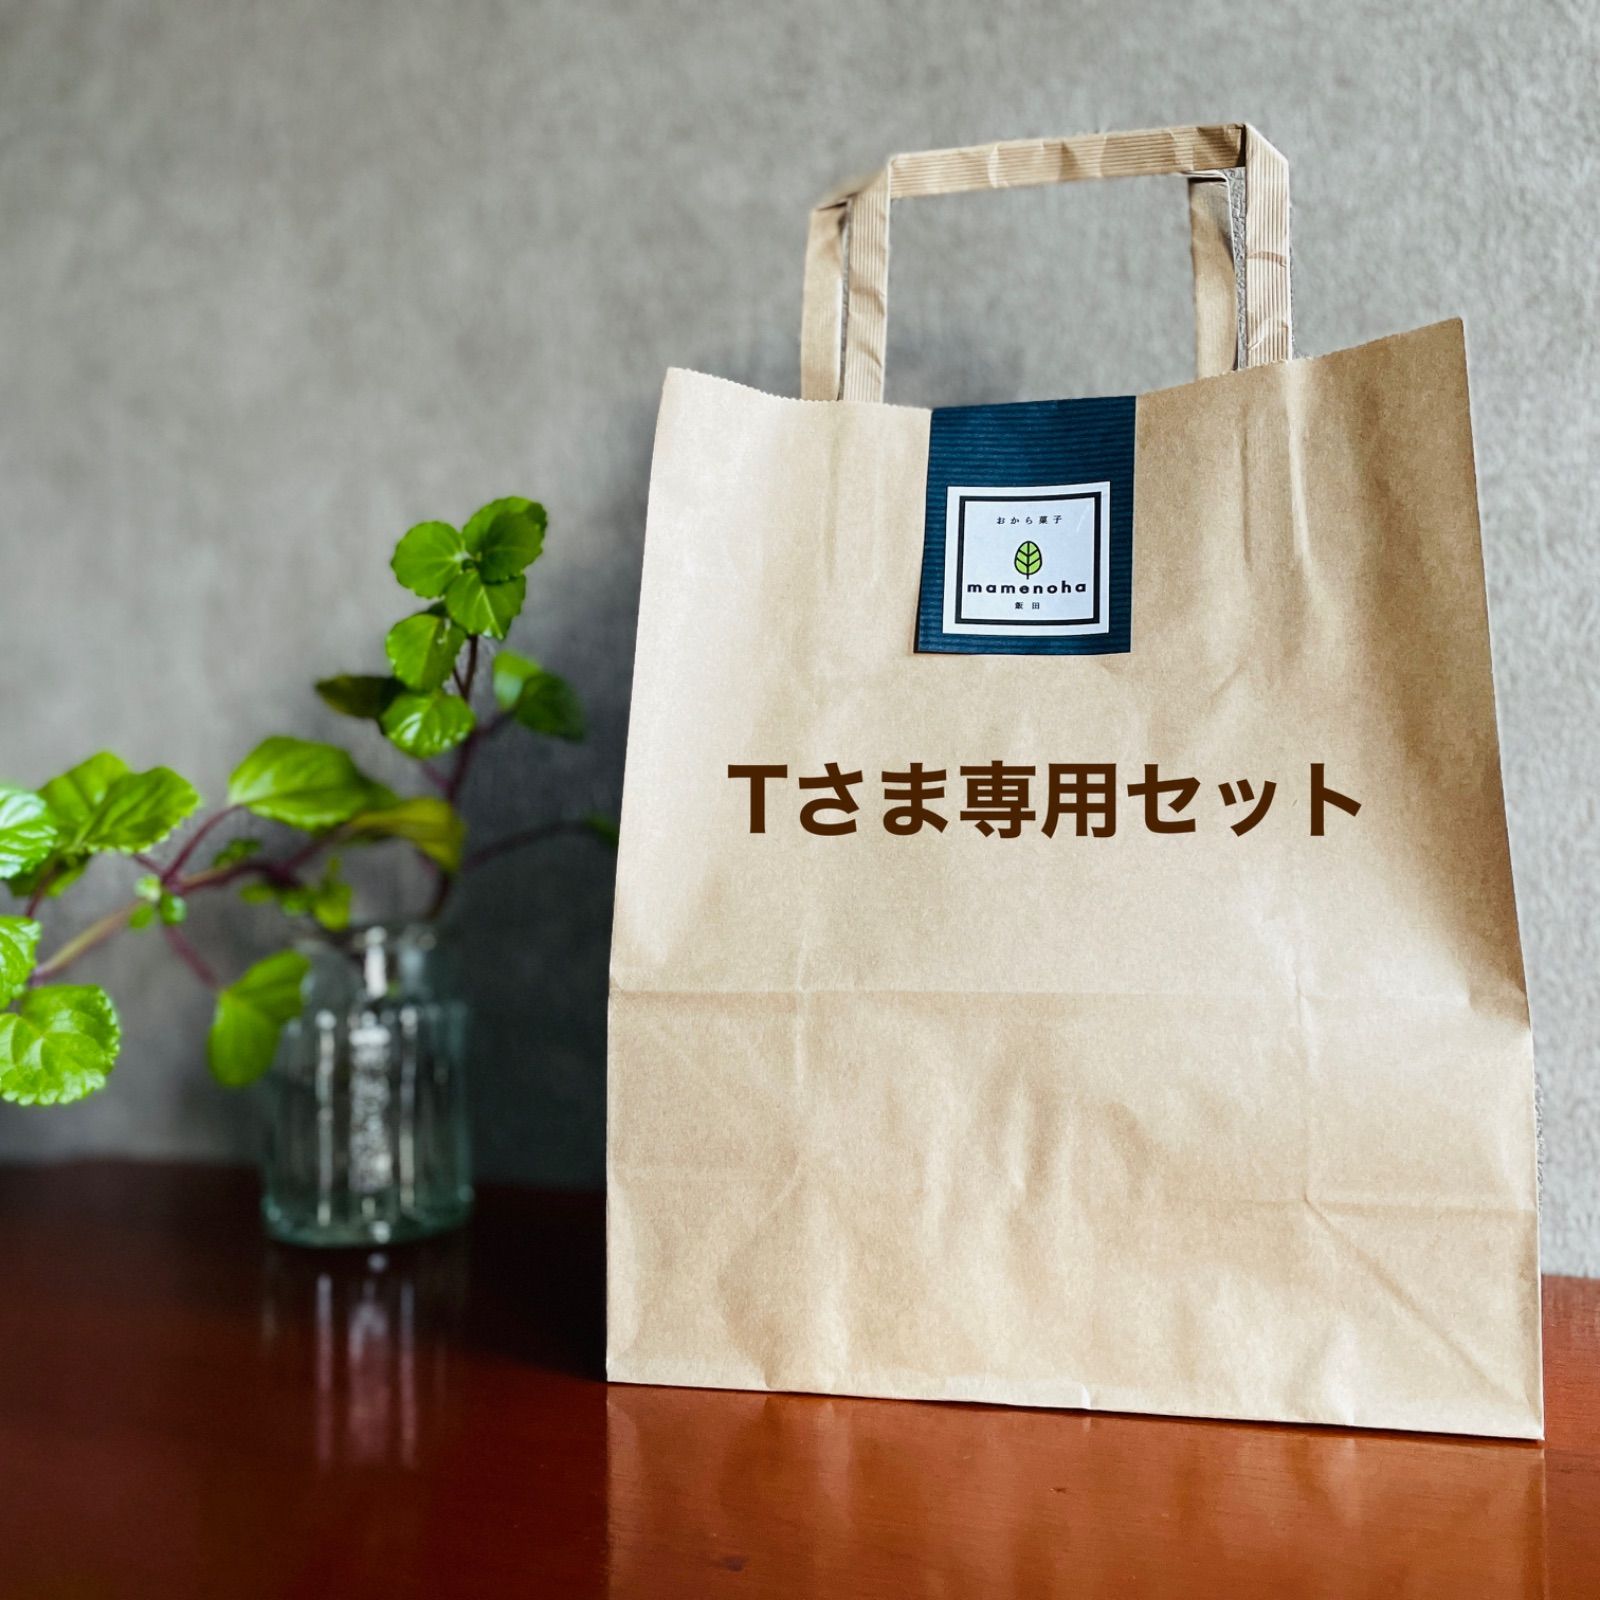 Tさま専用セット - おから菓子専門店 ｍａｍｅｎｏｈａ飯田 - メルカリ